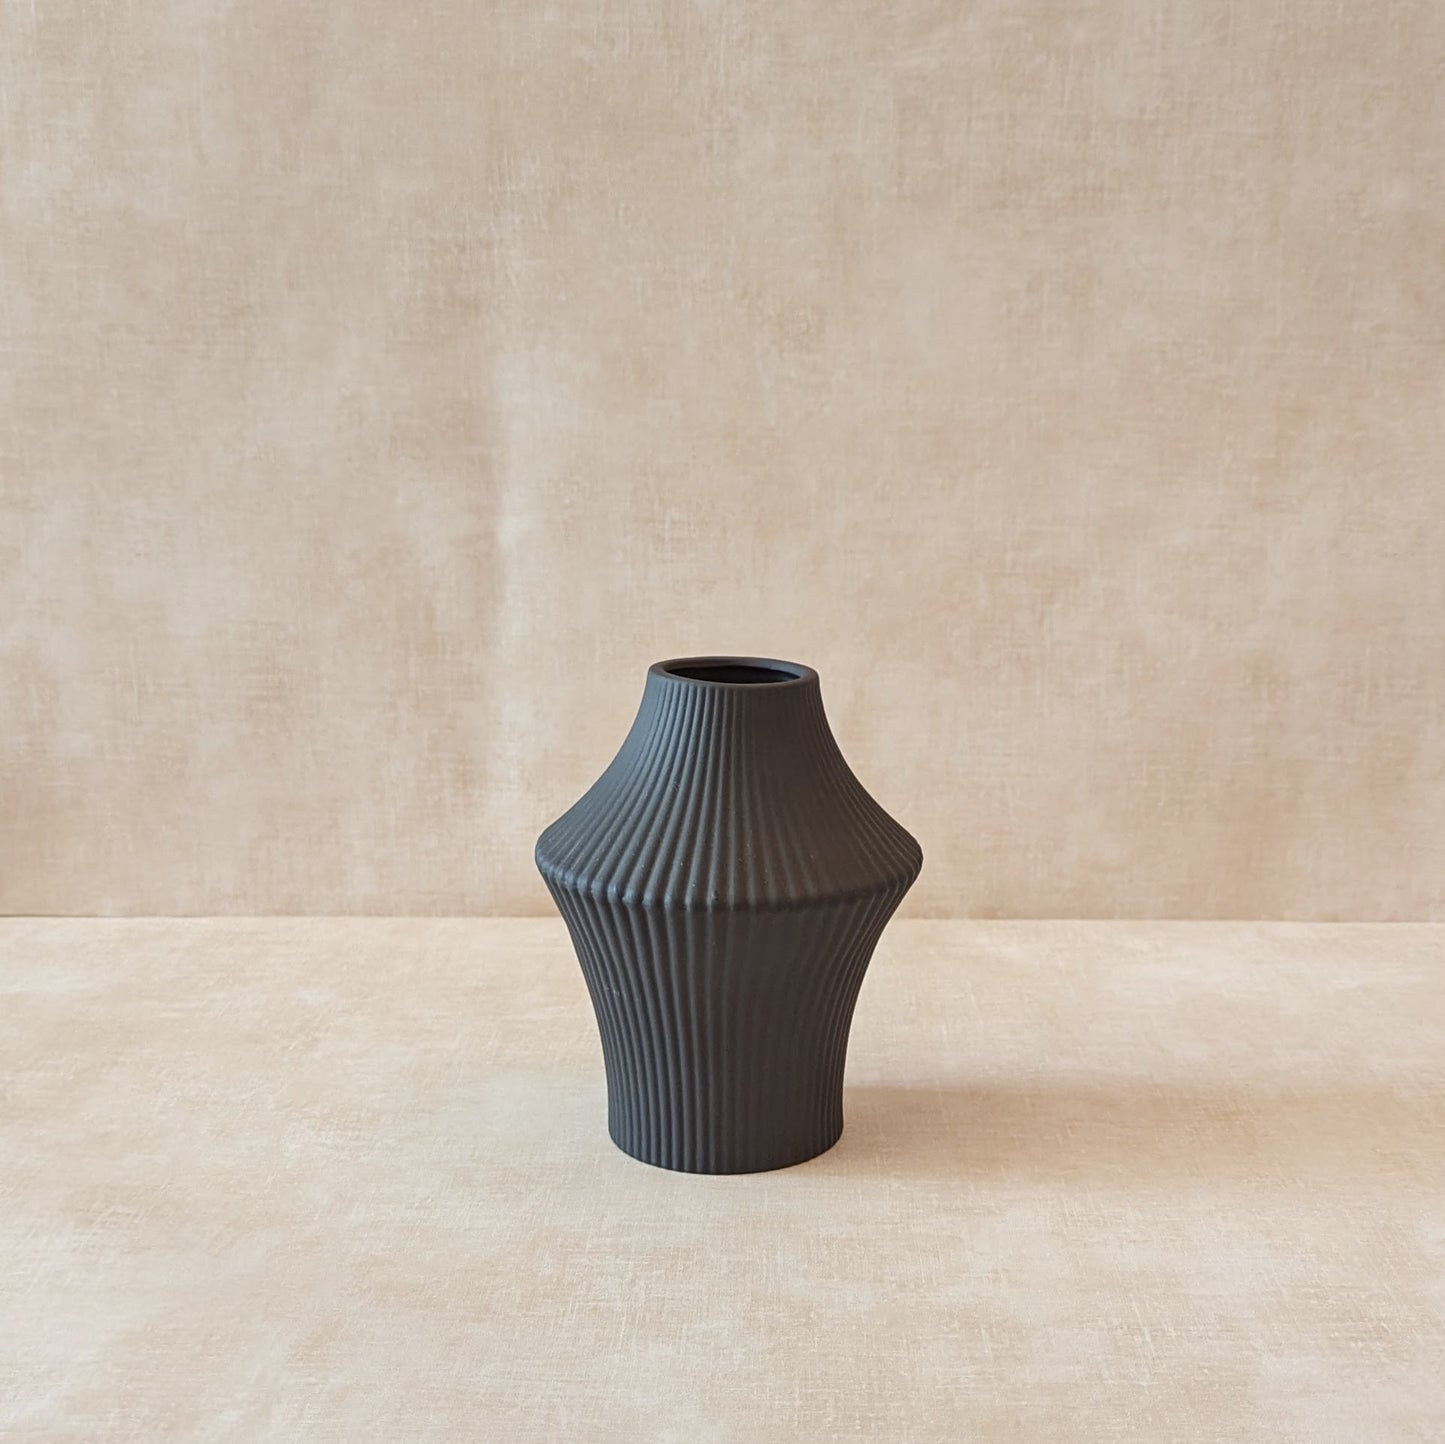 Short Black Vase with Ridges